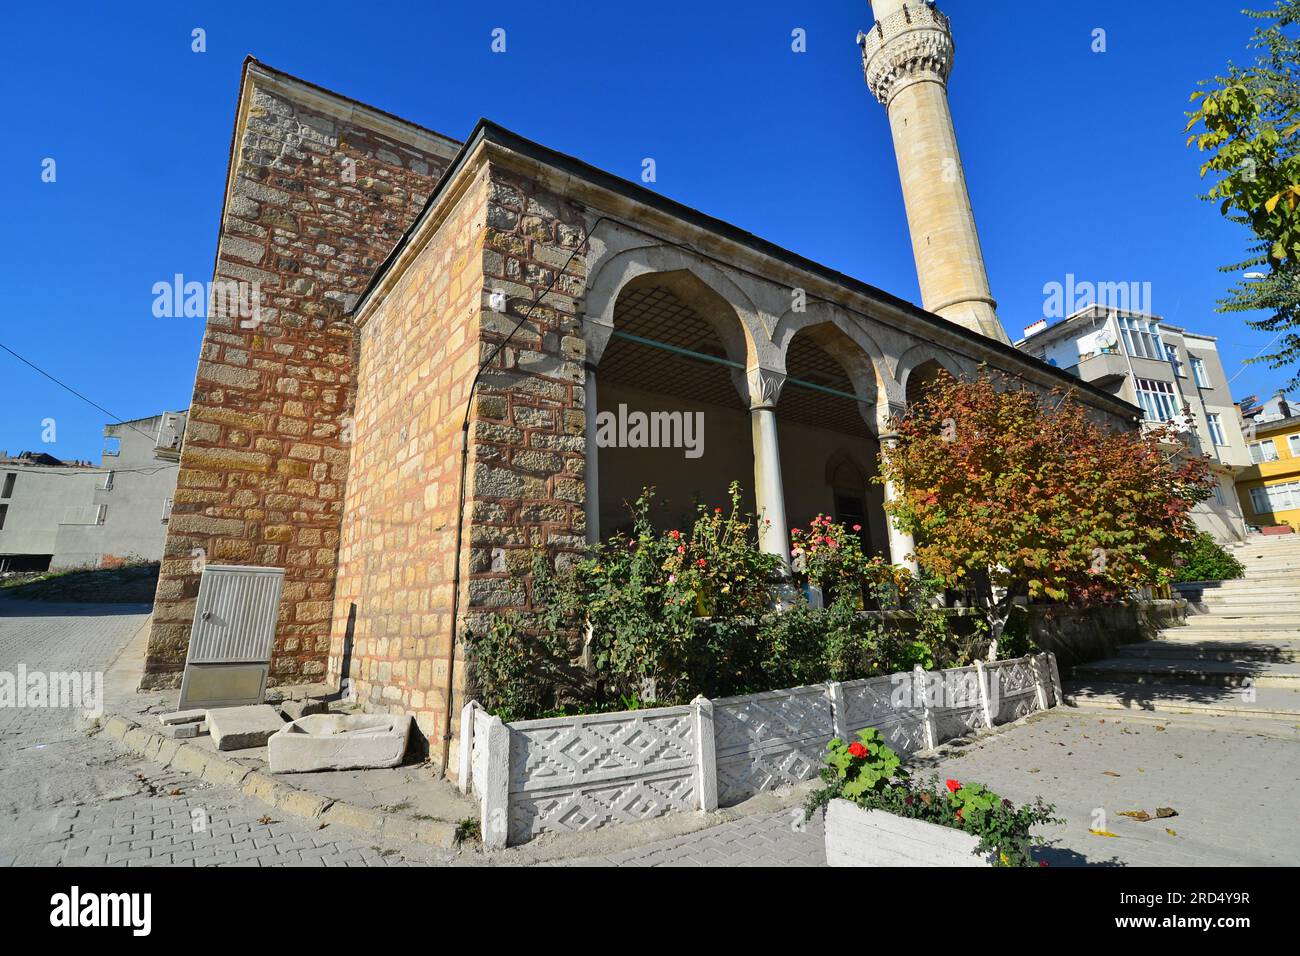 Celebi Sultan Mehmet Mosque in Hayrabolu, Turkey, was built in 1419. Stock Photo